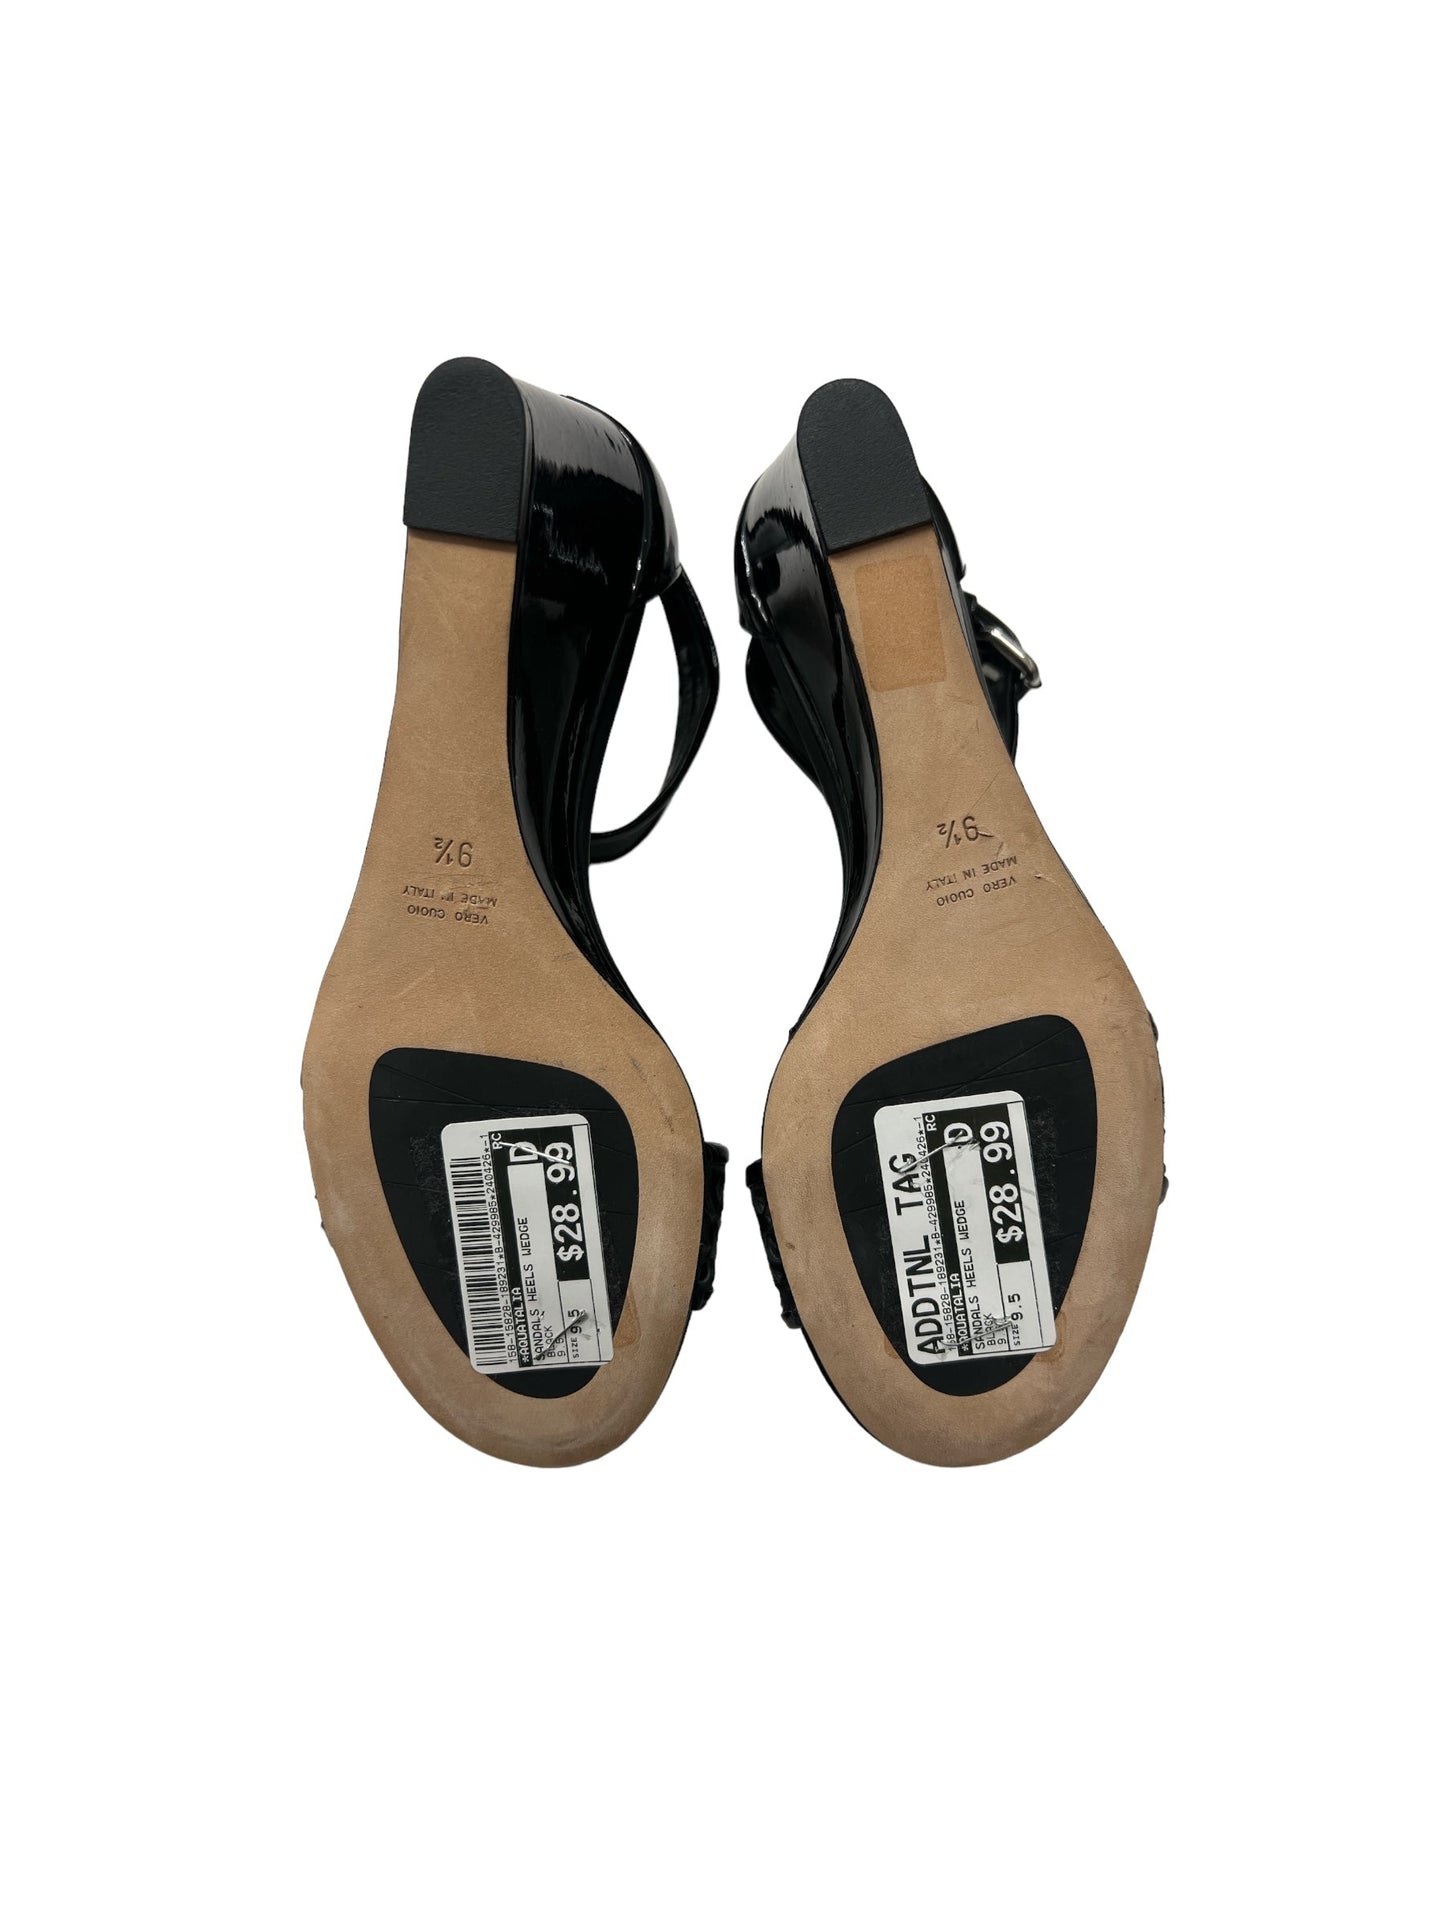 Sandals Heels Wedge By Aquatalia  Size: 9.5